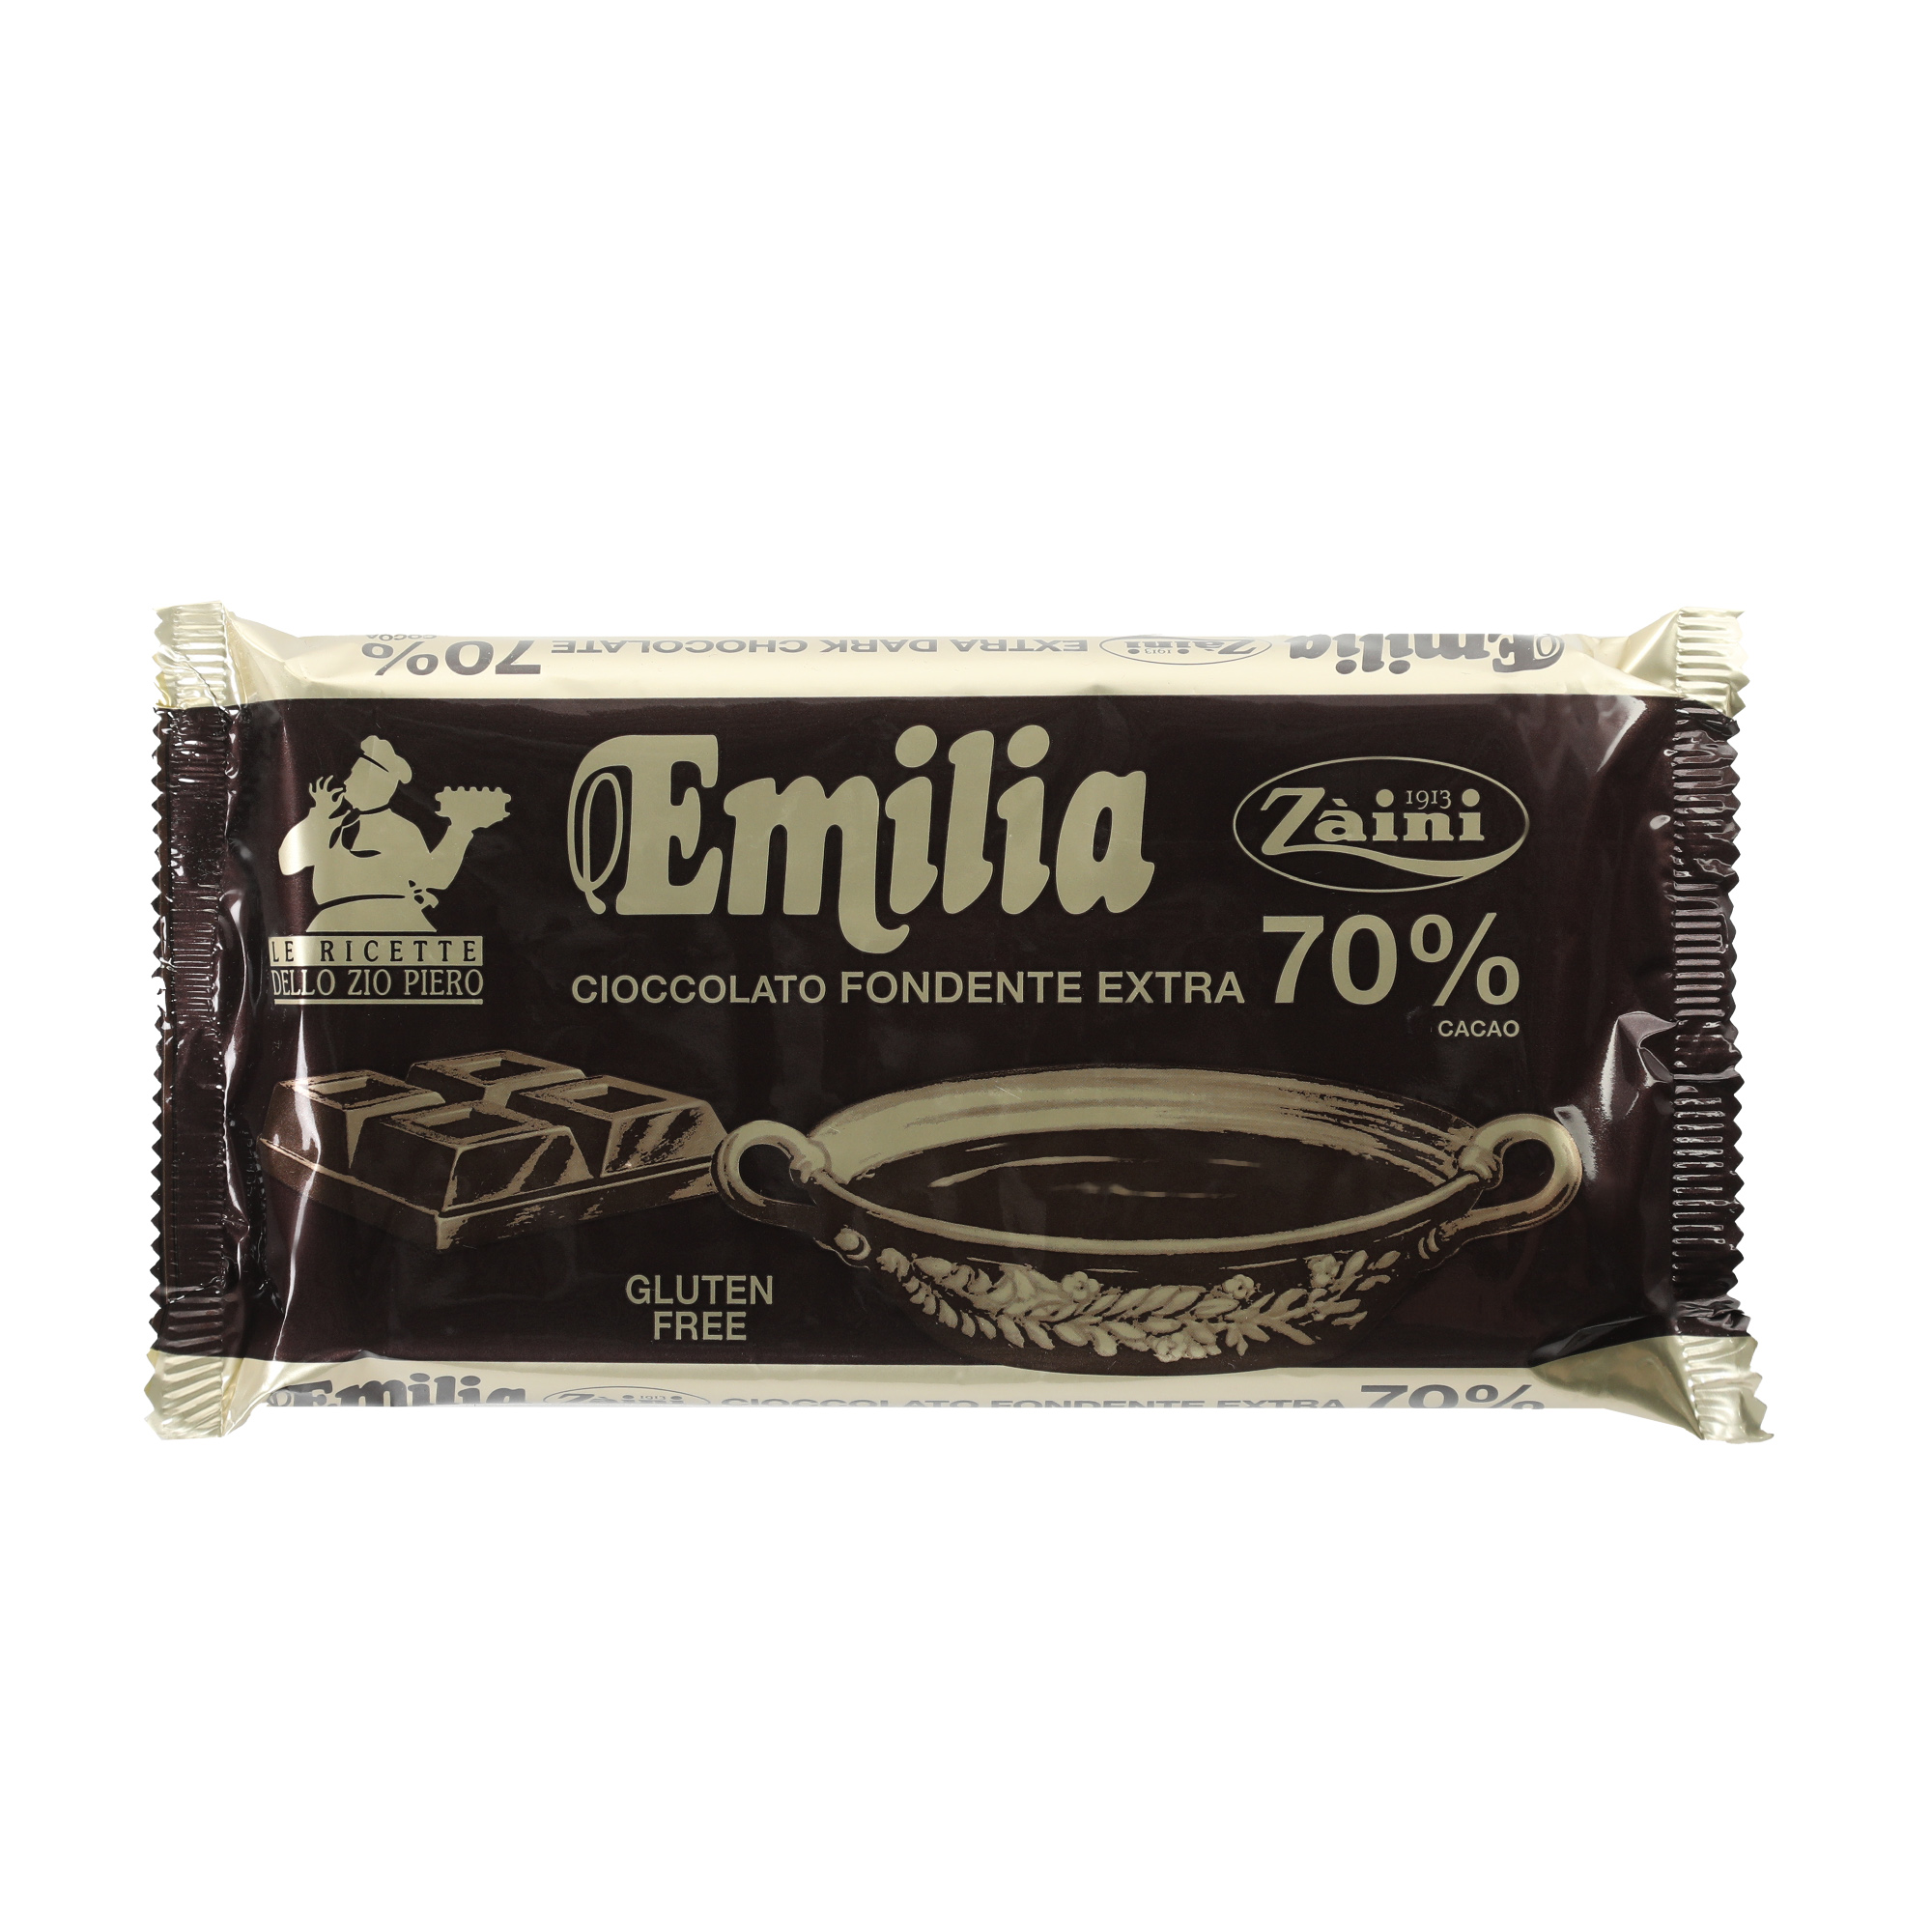 Шоколад темный 70% Zaini Emilia, 400 г шоколад темный 70% zaini emilia 200 г